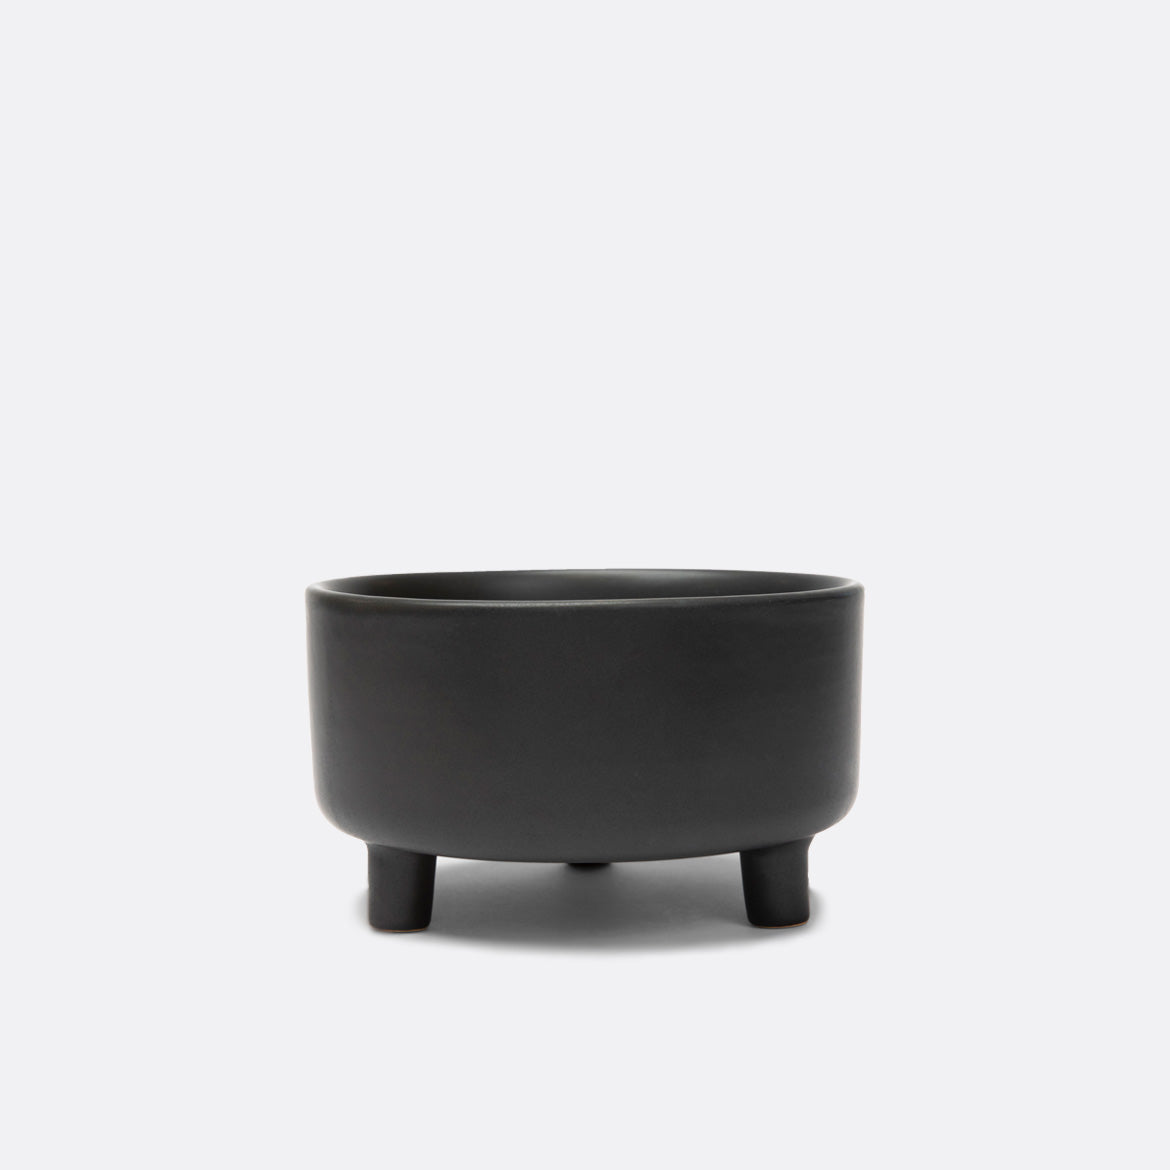 Footed Ceramic Dog Bowls - 2 Sizes